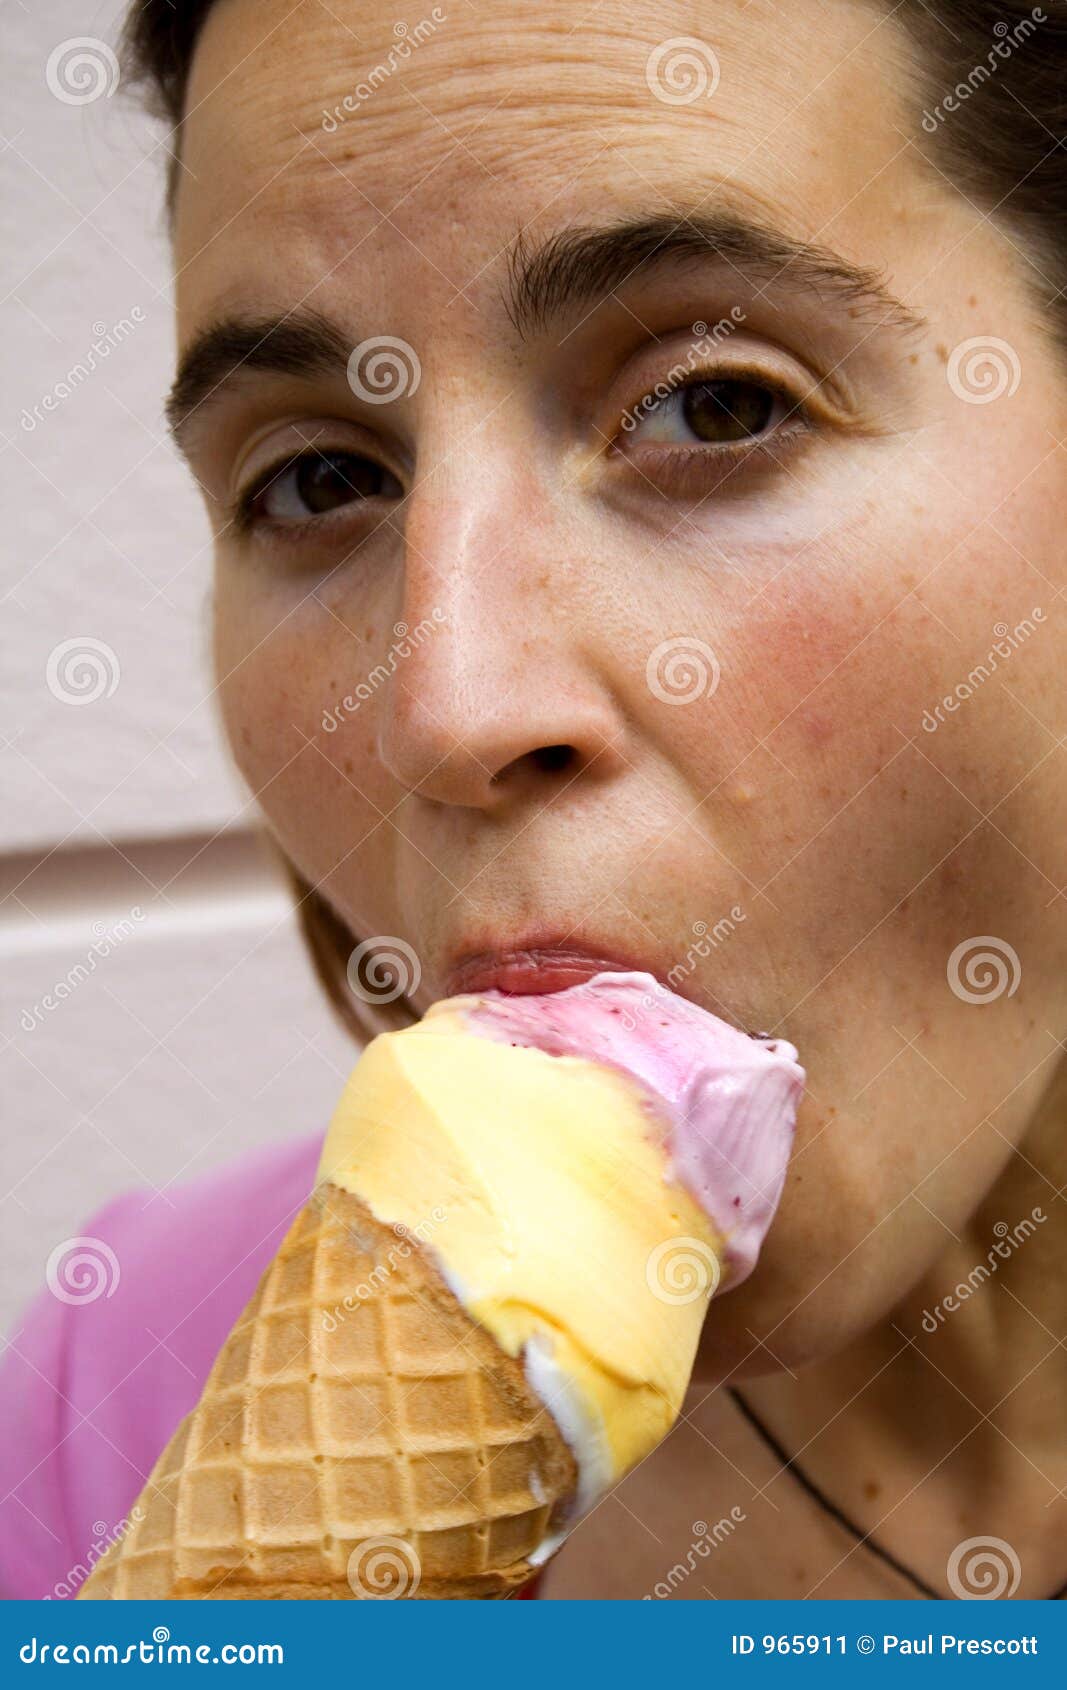 Full Mouth Ice Cream Stock Image - Image: 965911